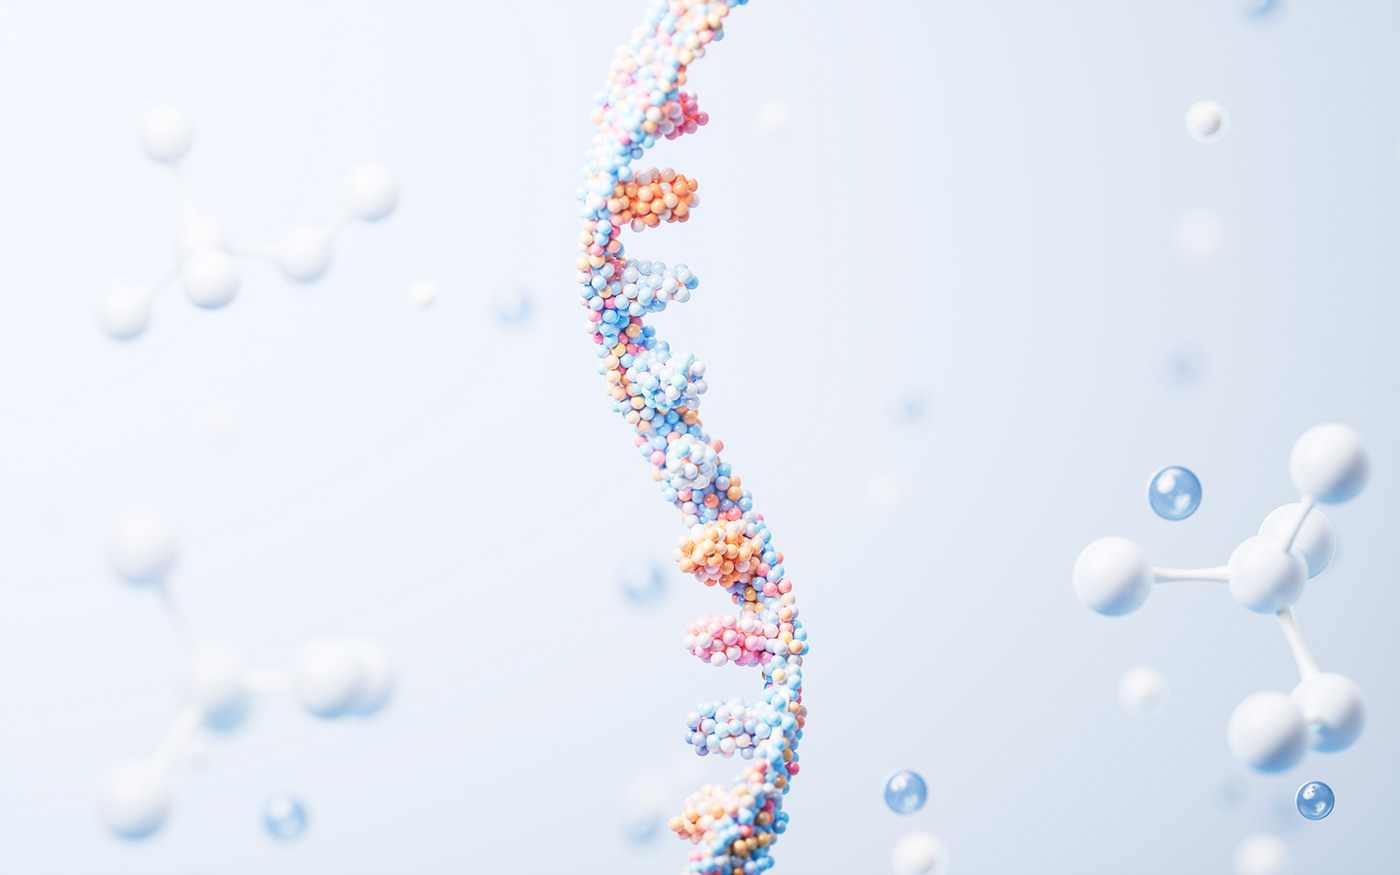 RNA science biology scientific illustration medical Health medicine протеин Transcription DNA